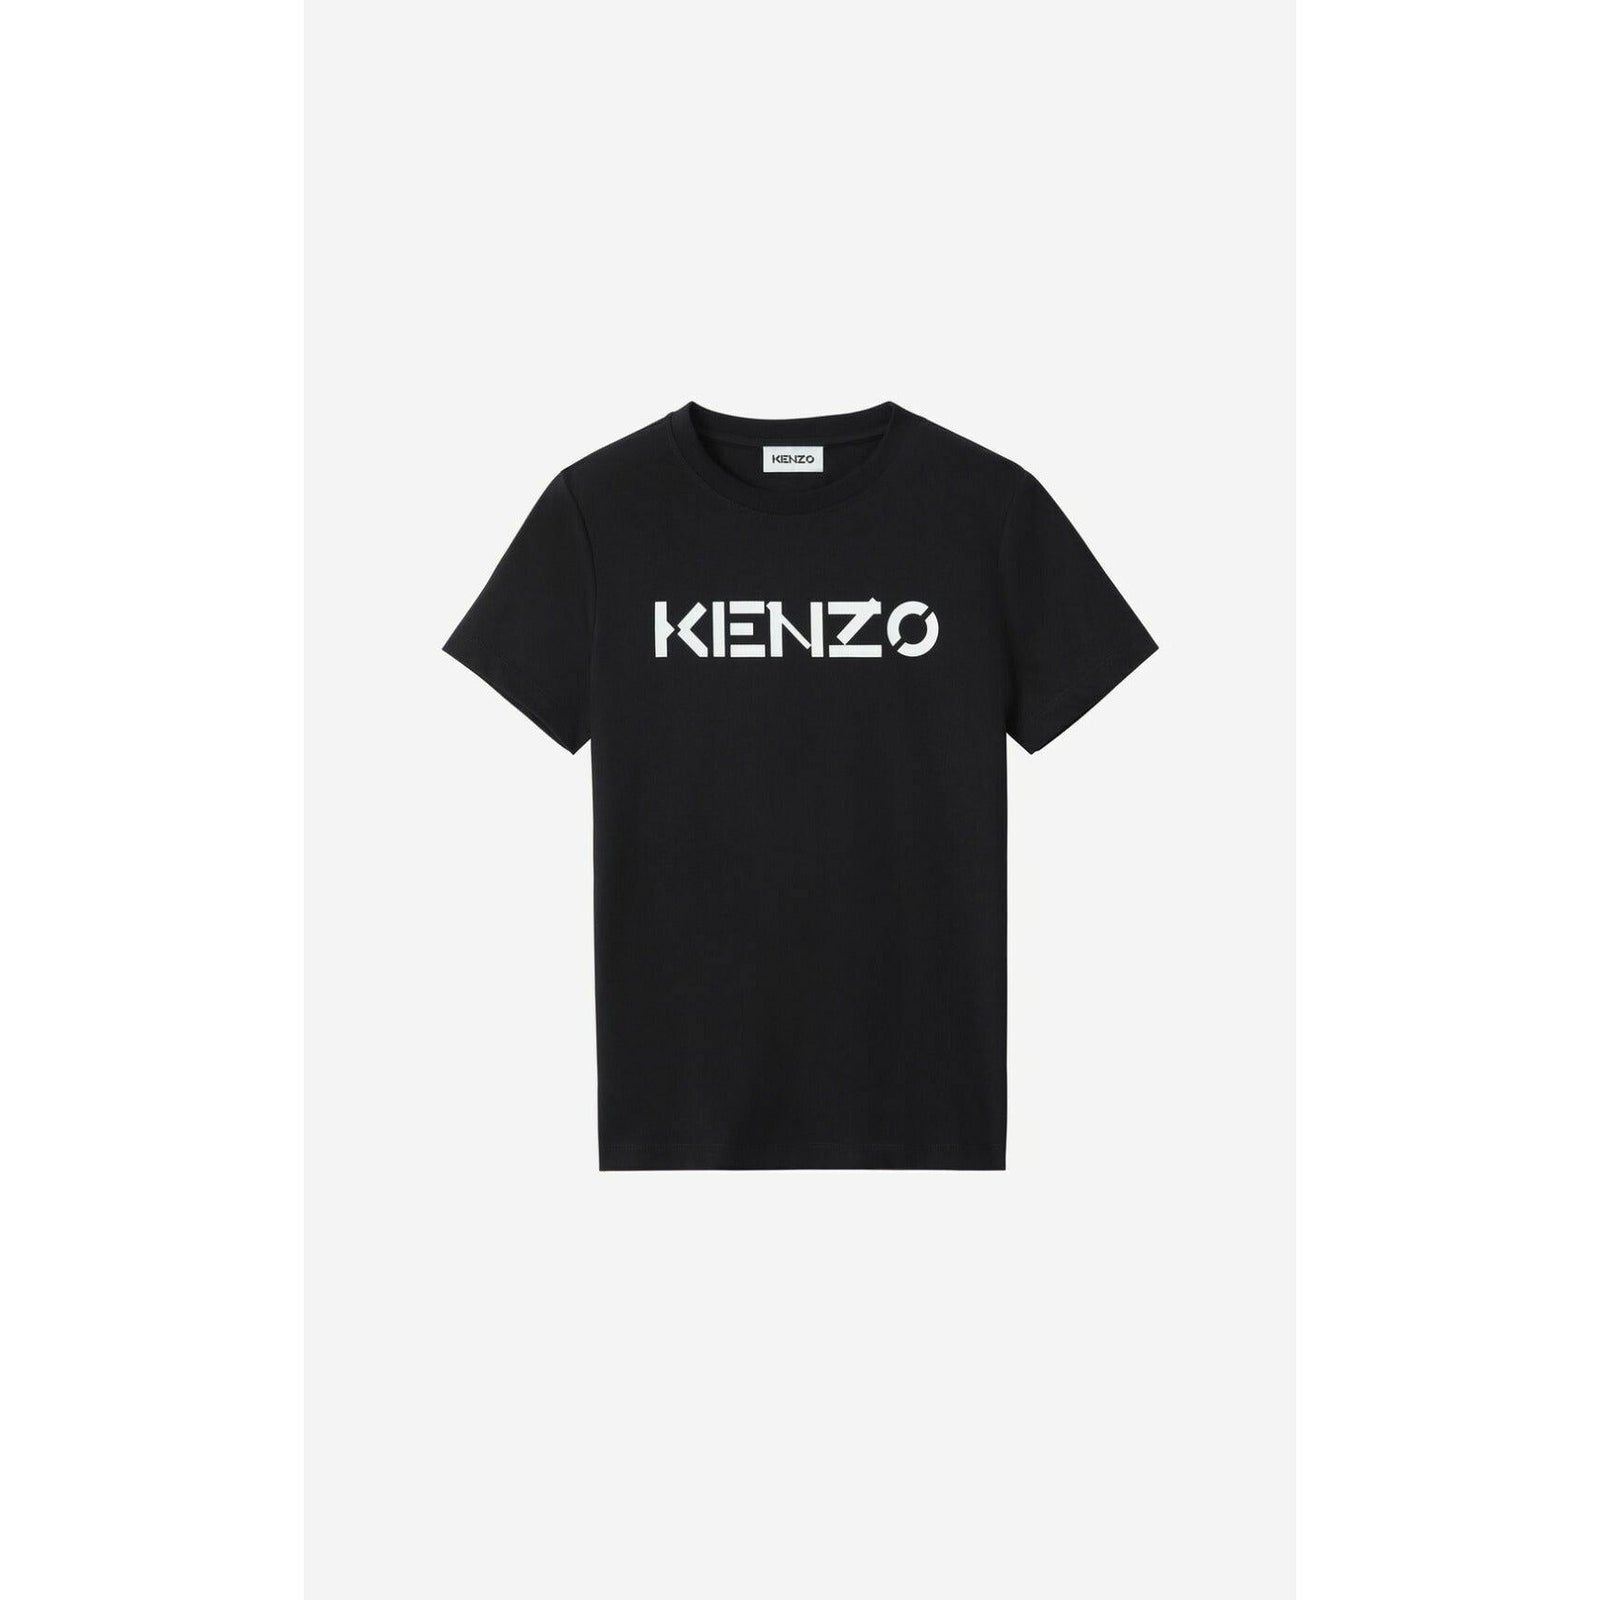 KENZO T SHIRT - Yooto